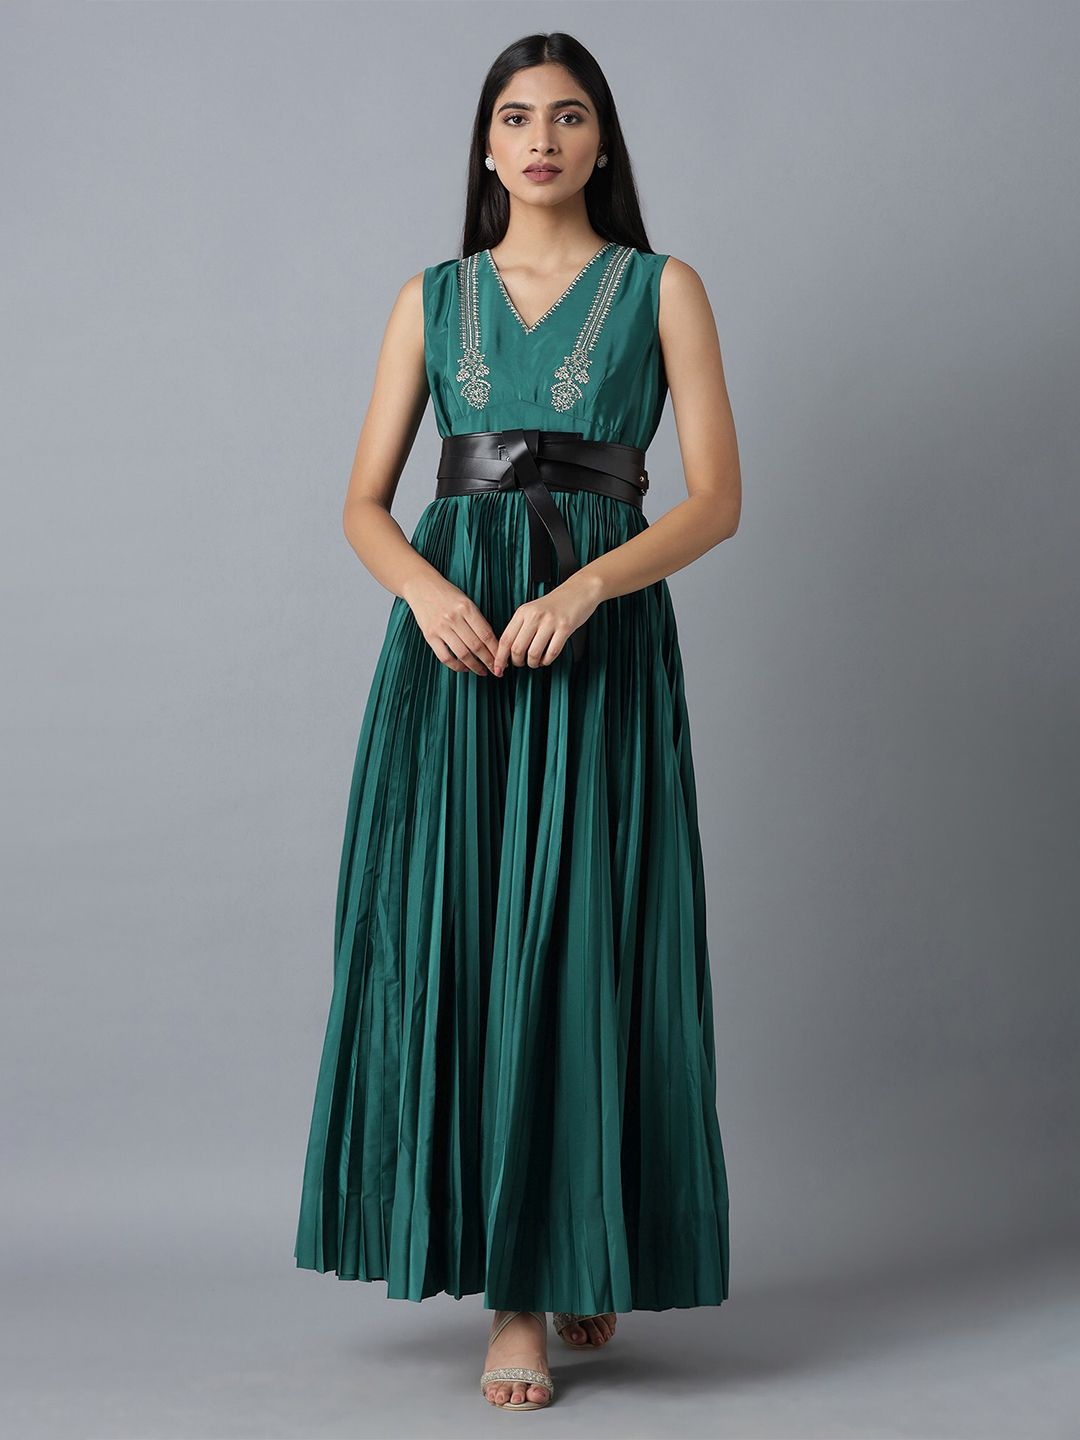 W Green Ethnic Maxi Dress Price in India